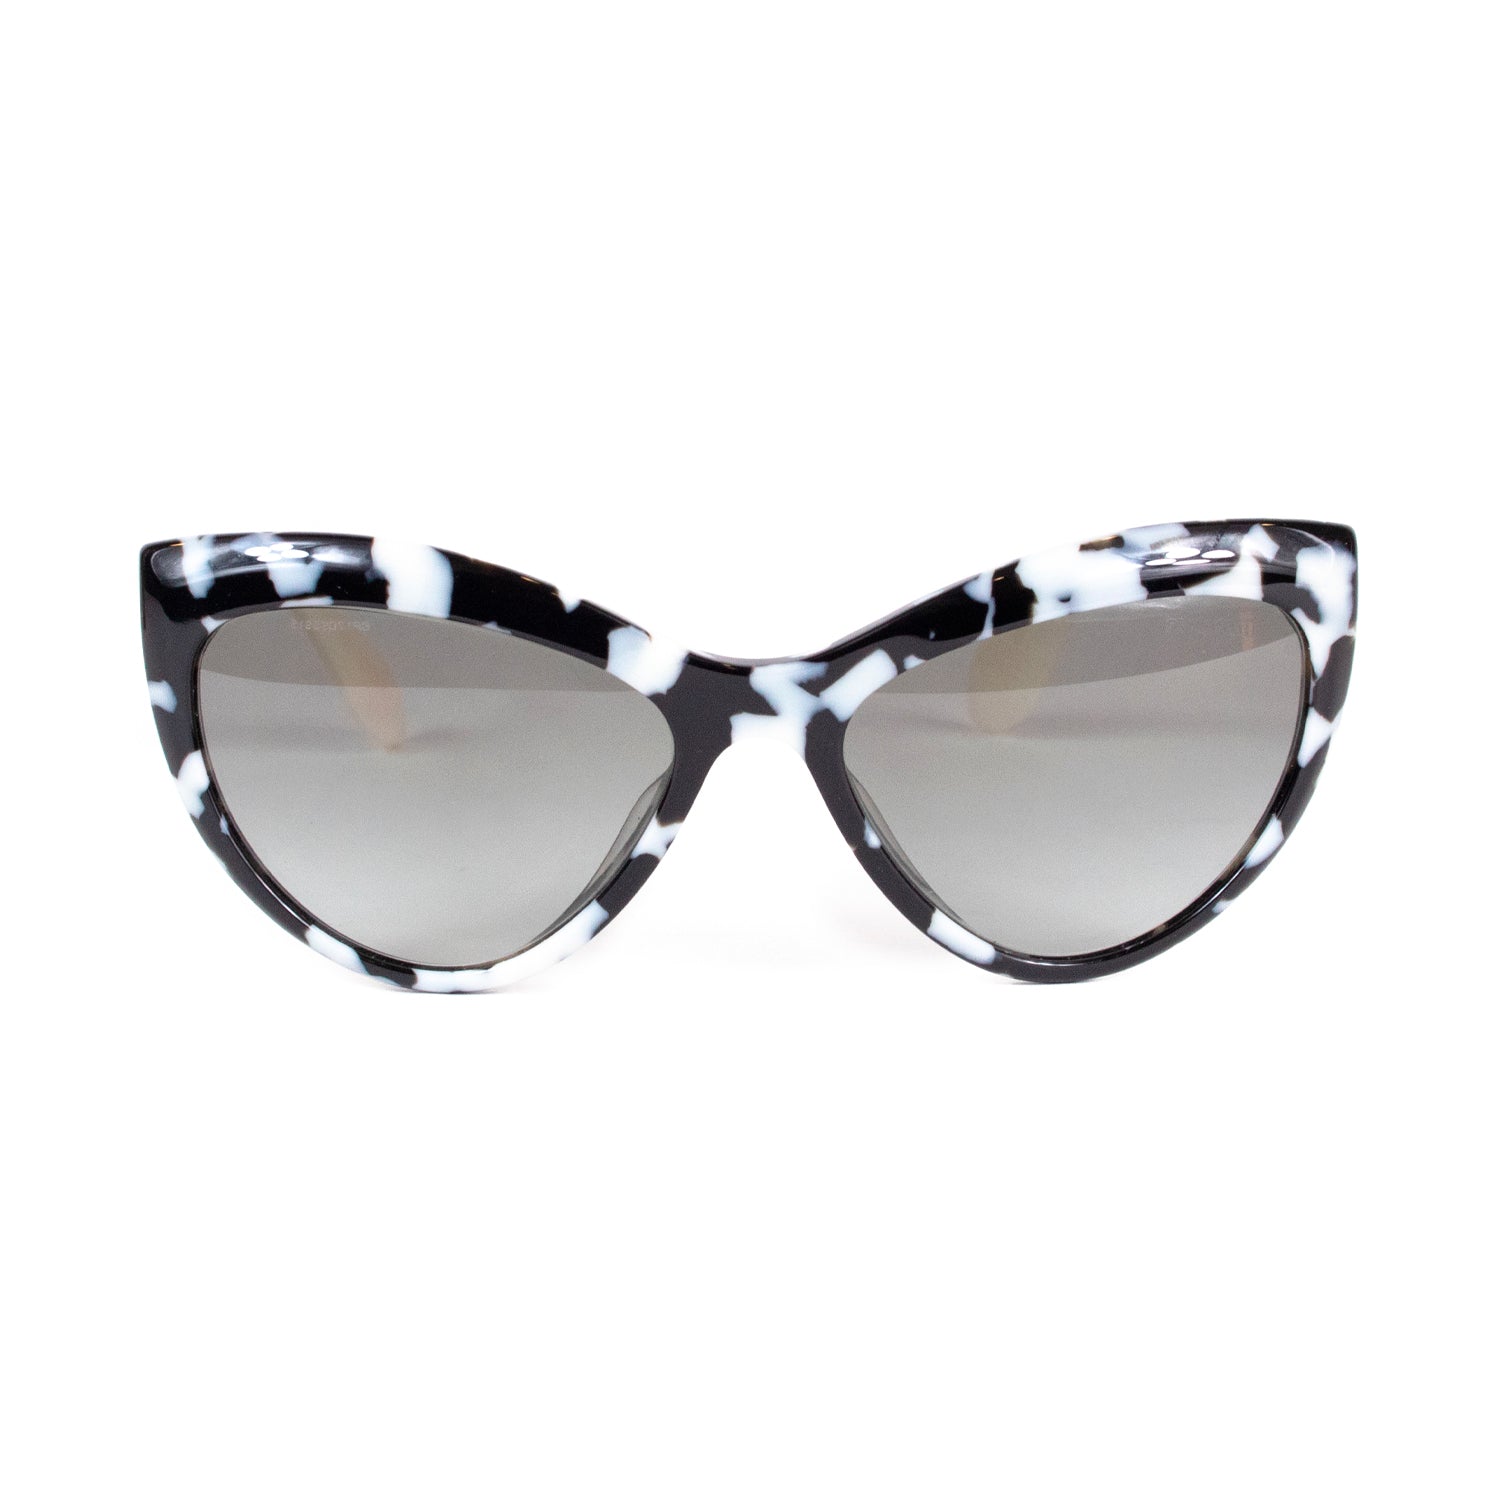 Black &amp; White cat print Sunglasses